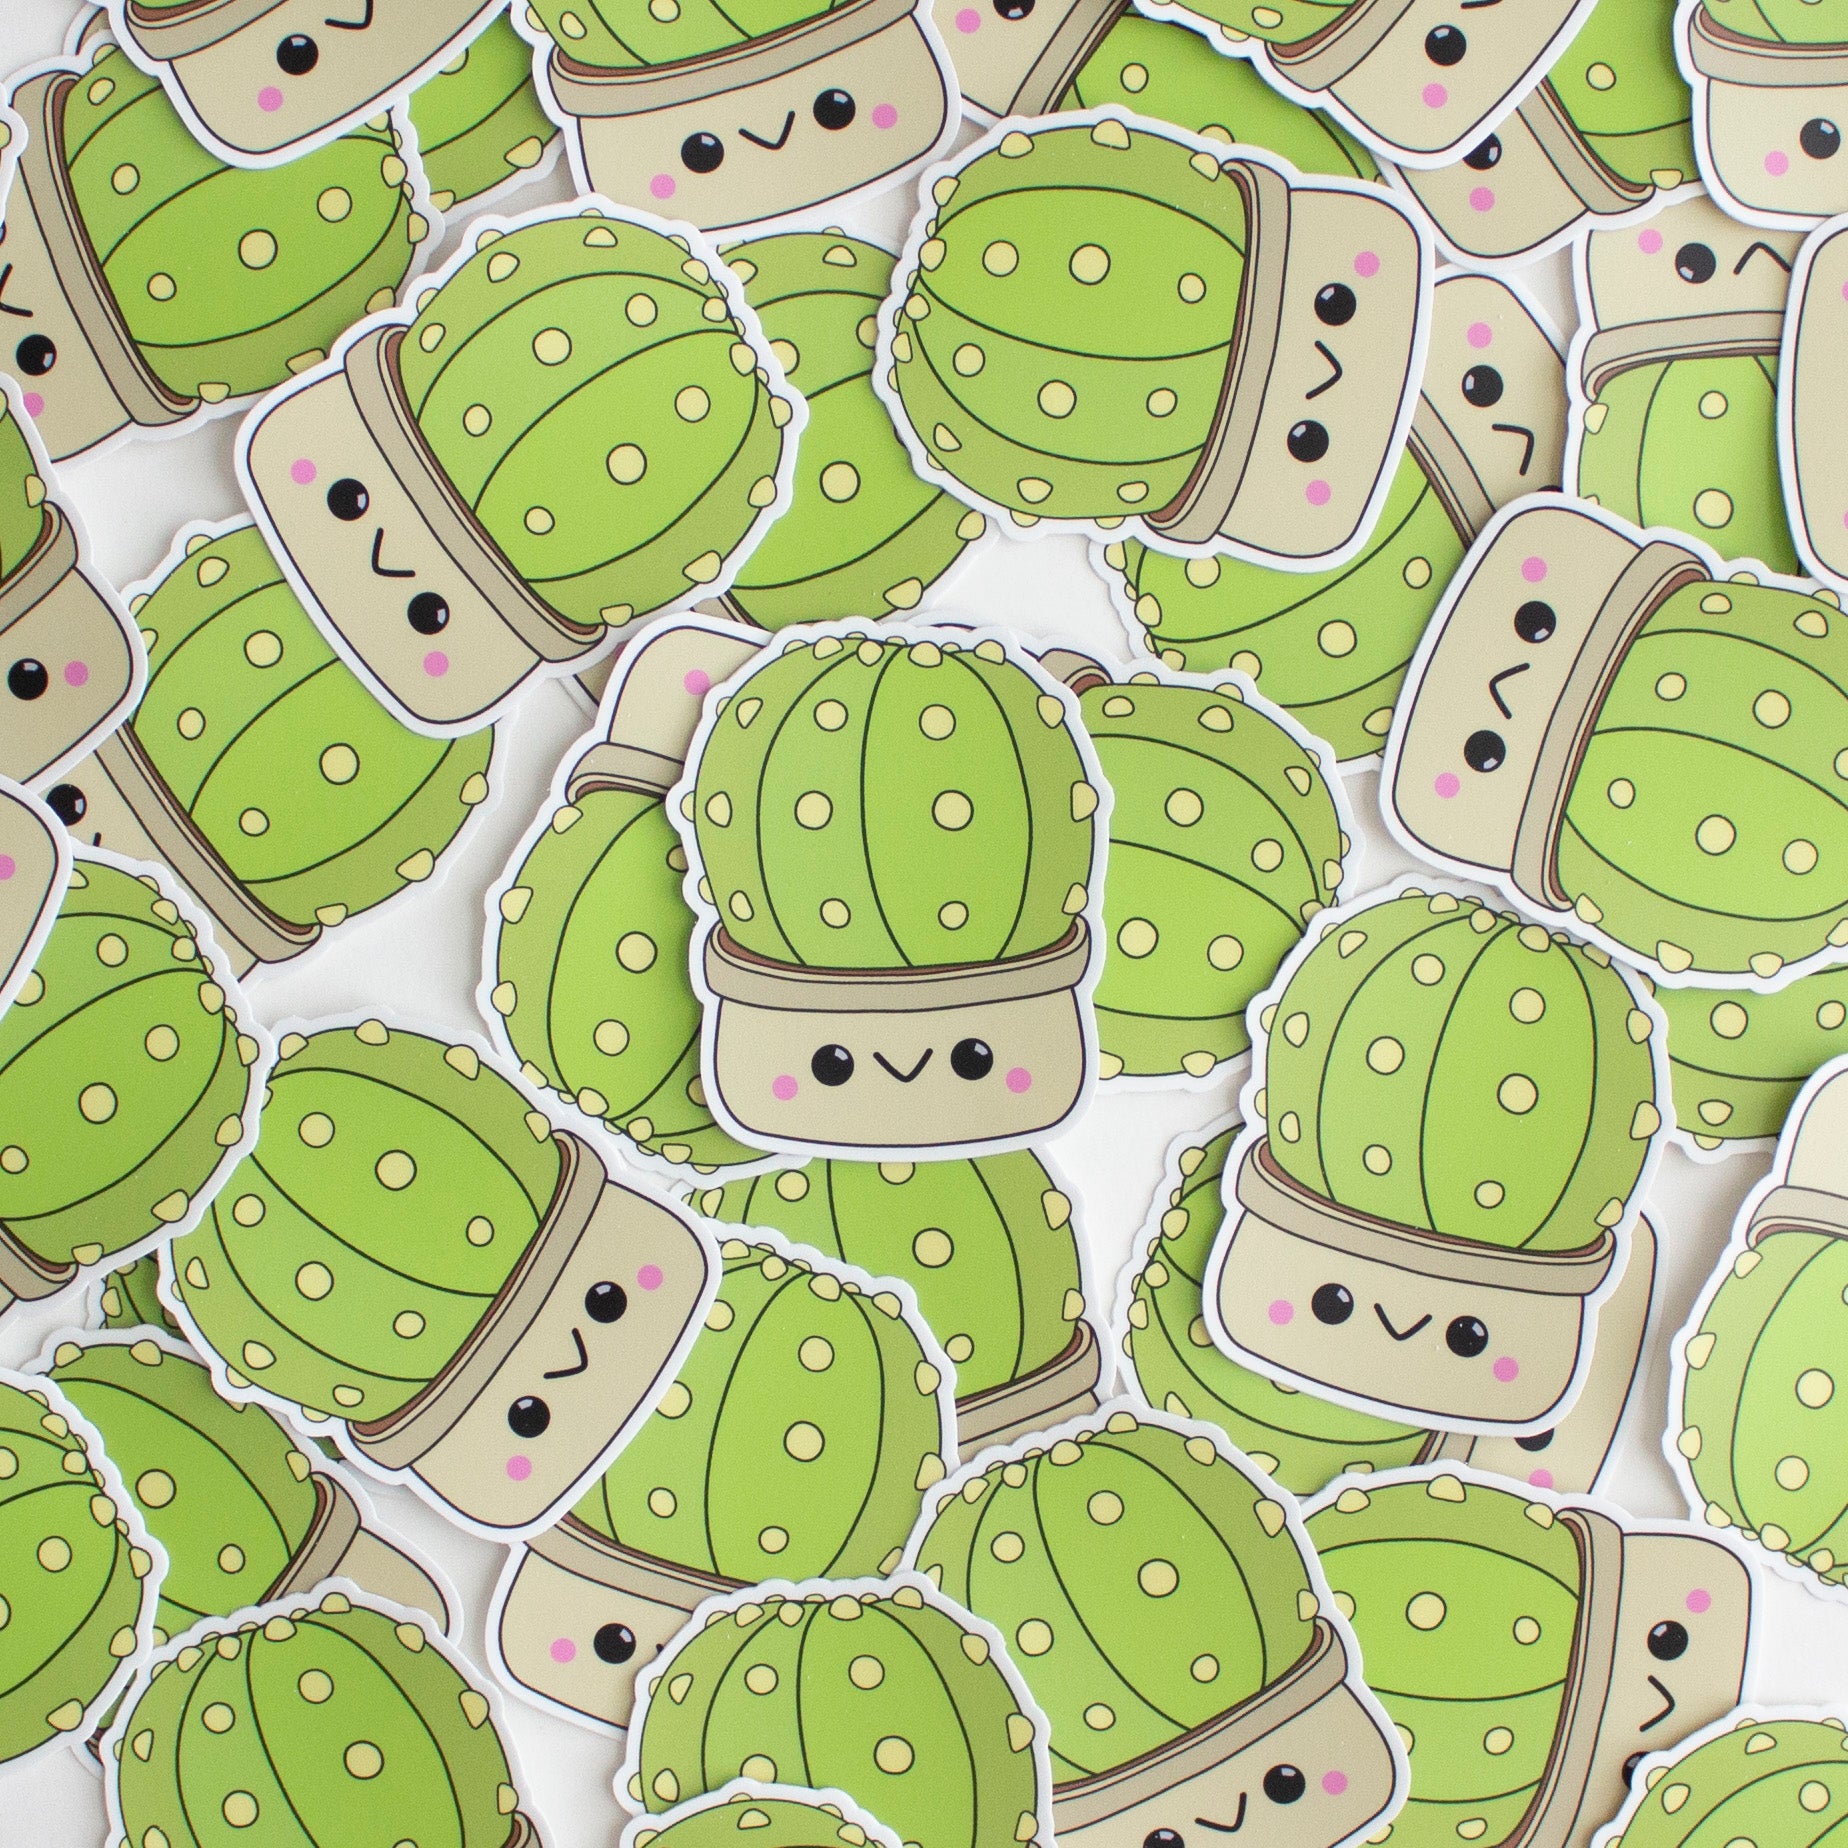 Kawaii sand dollar cactus vinyl sticker â a menagerie of stitches